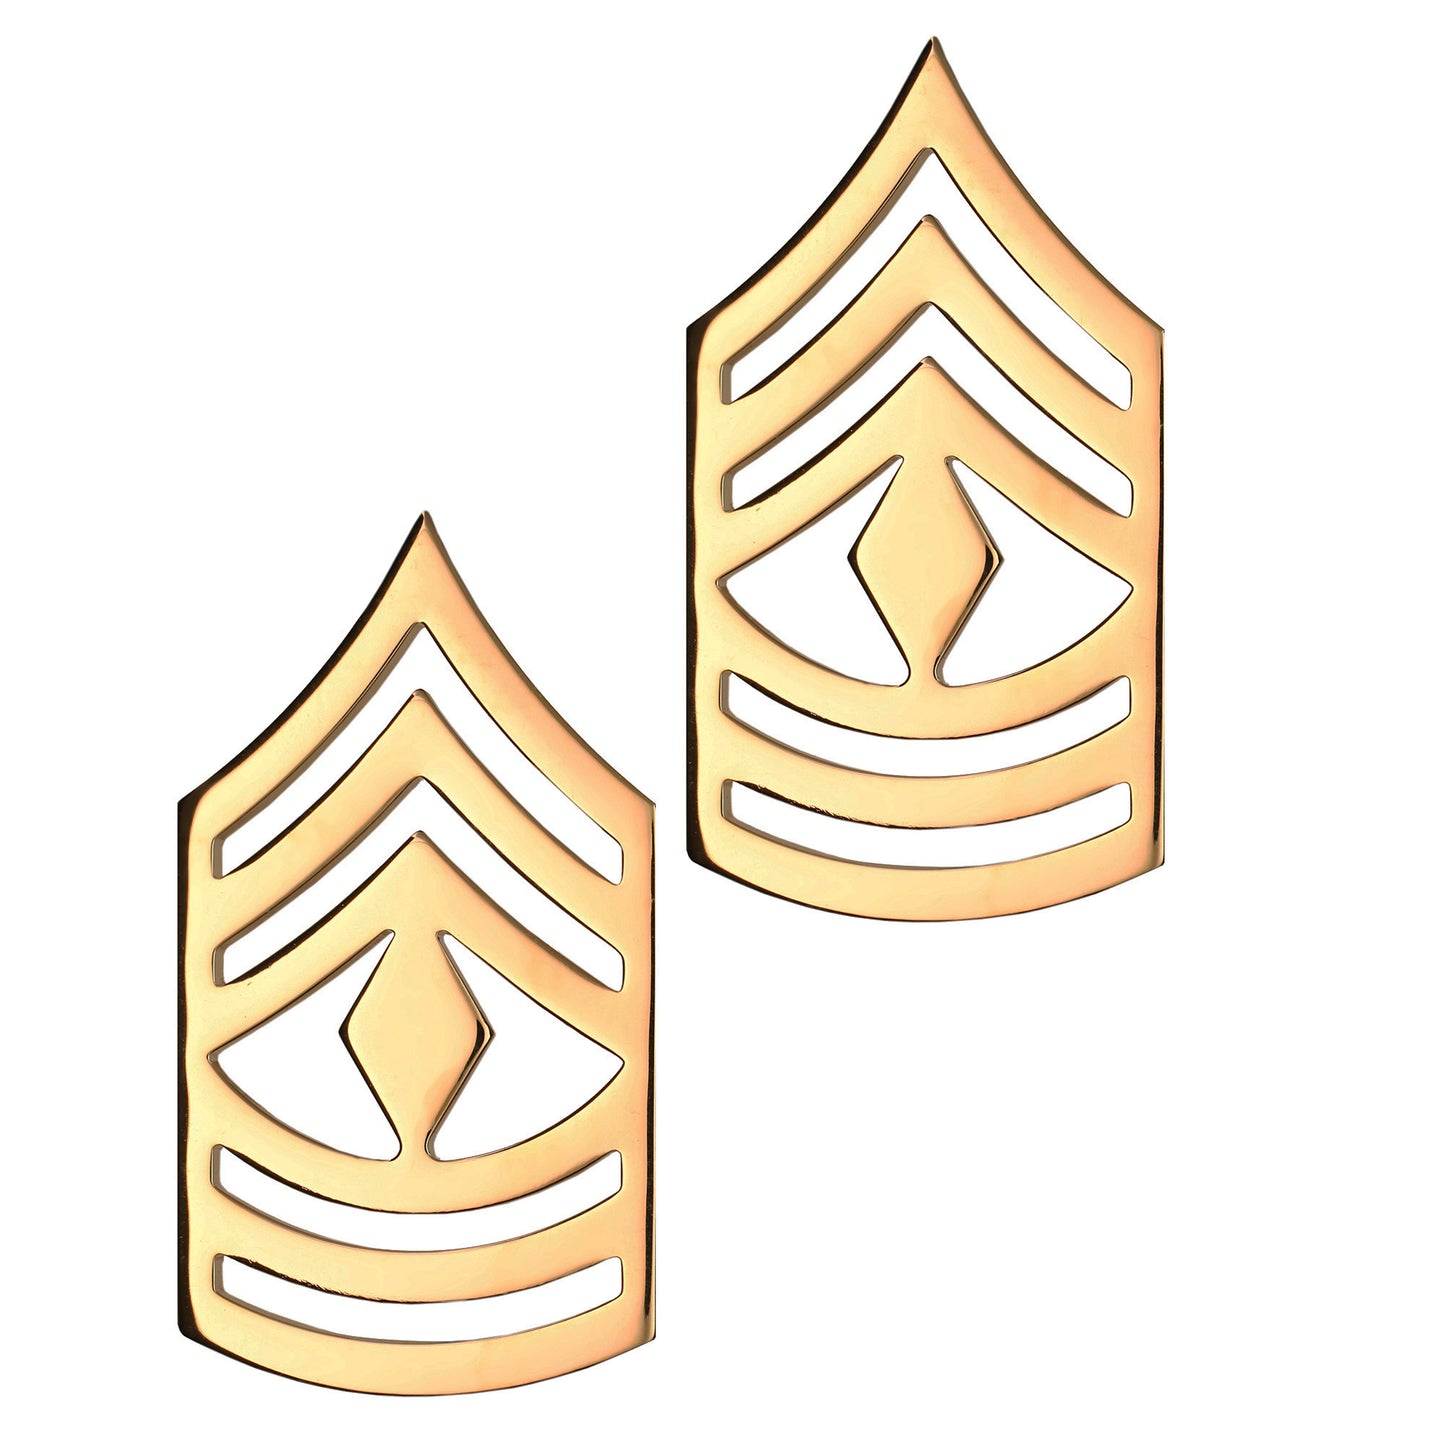 army first sergeant insignia